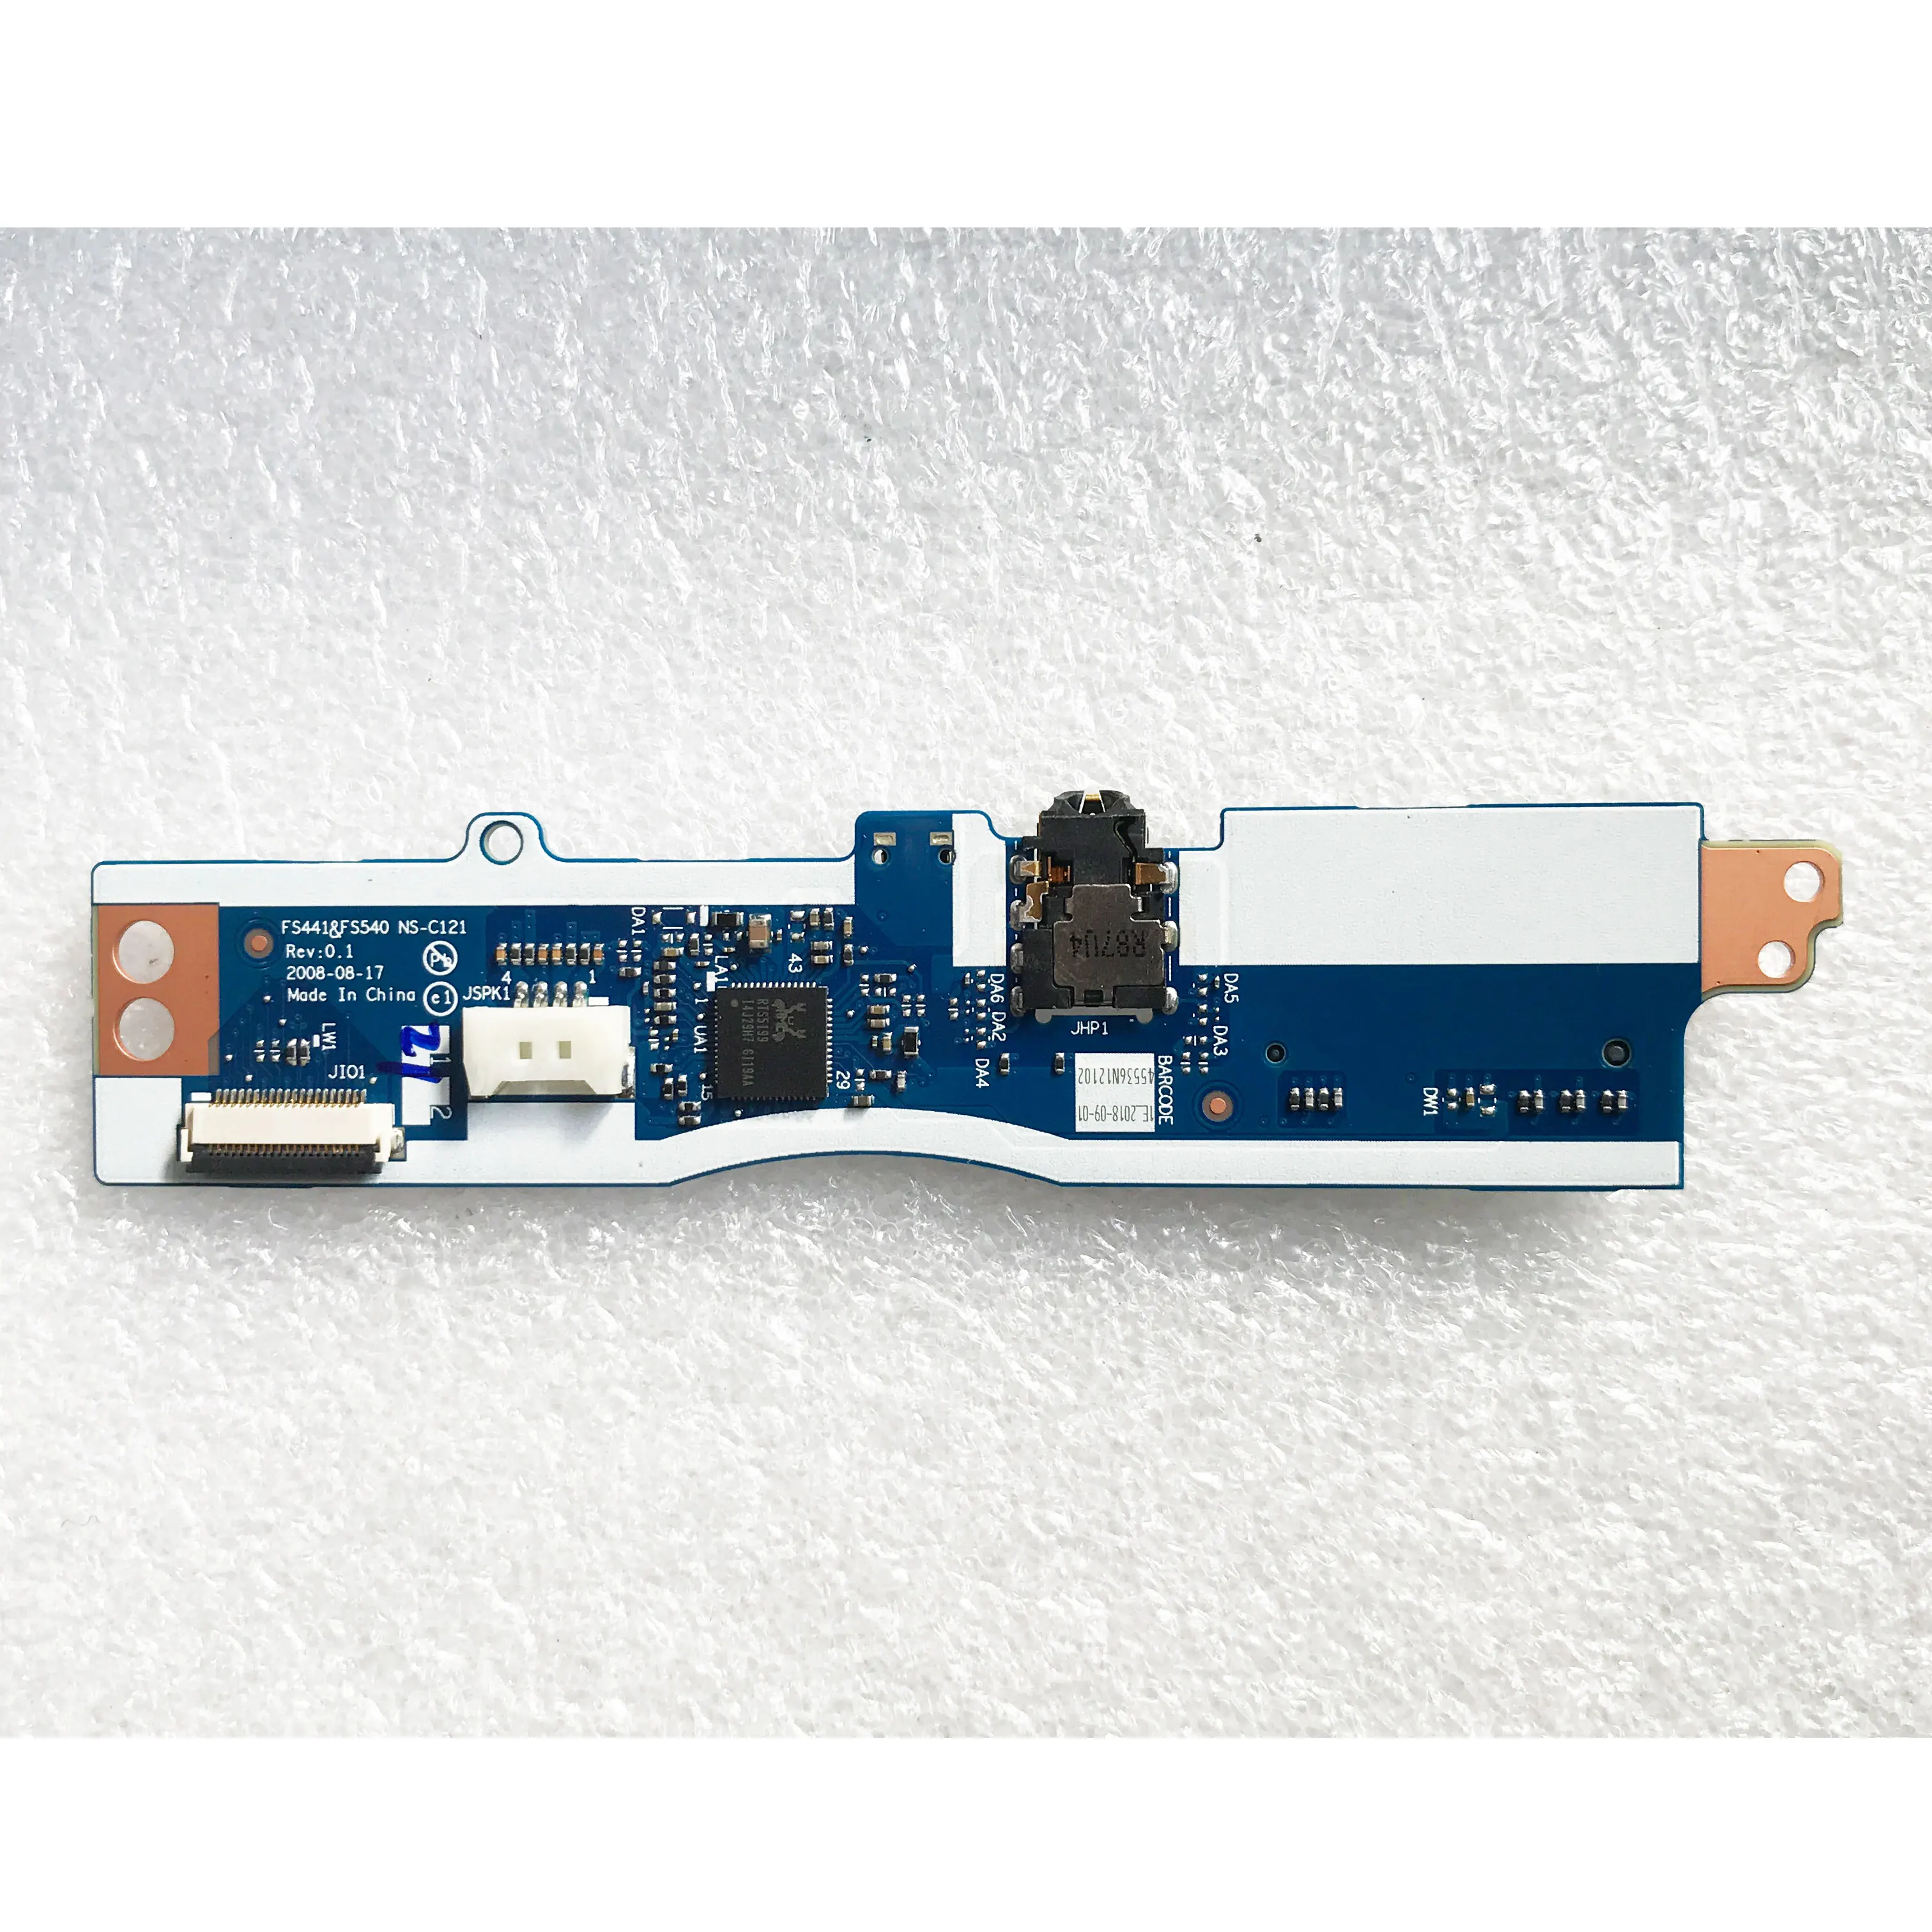 

NEW original FOR Lenovo IdeaPad S145-15 S145-15IWL Audio Card Reader Board DA5 FV440 FS441 FS540 NS-C121 tested good